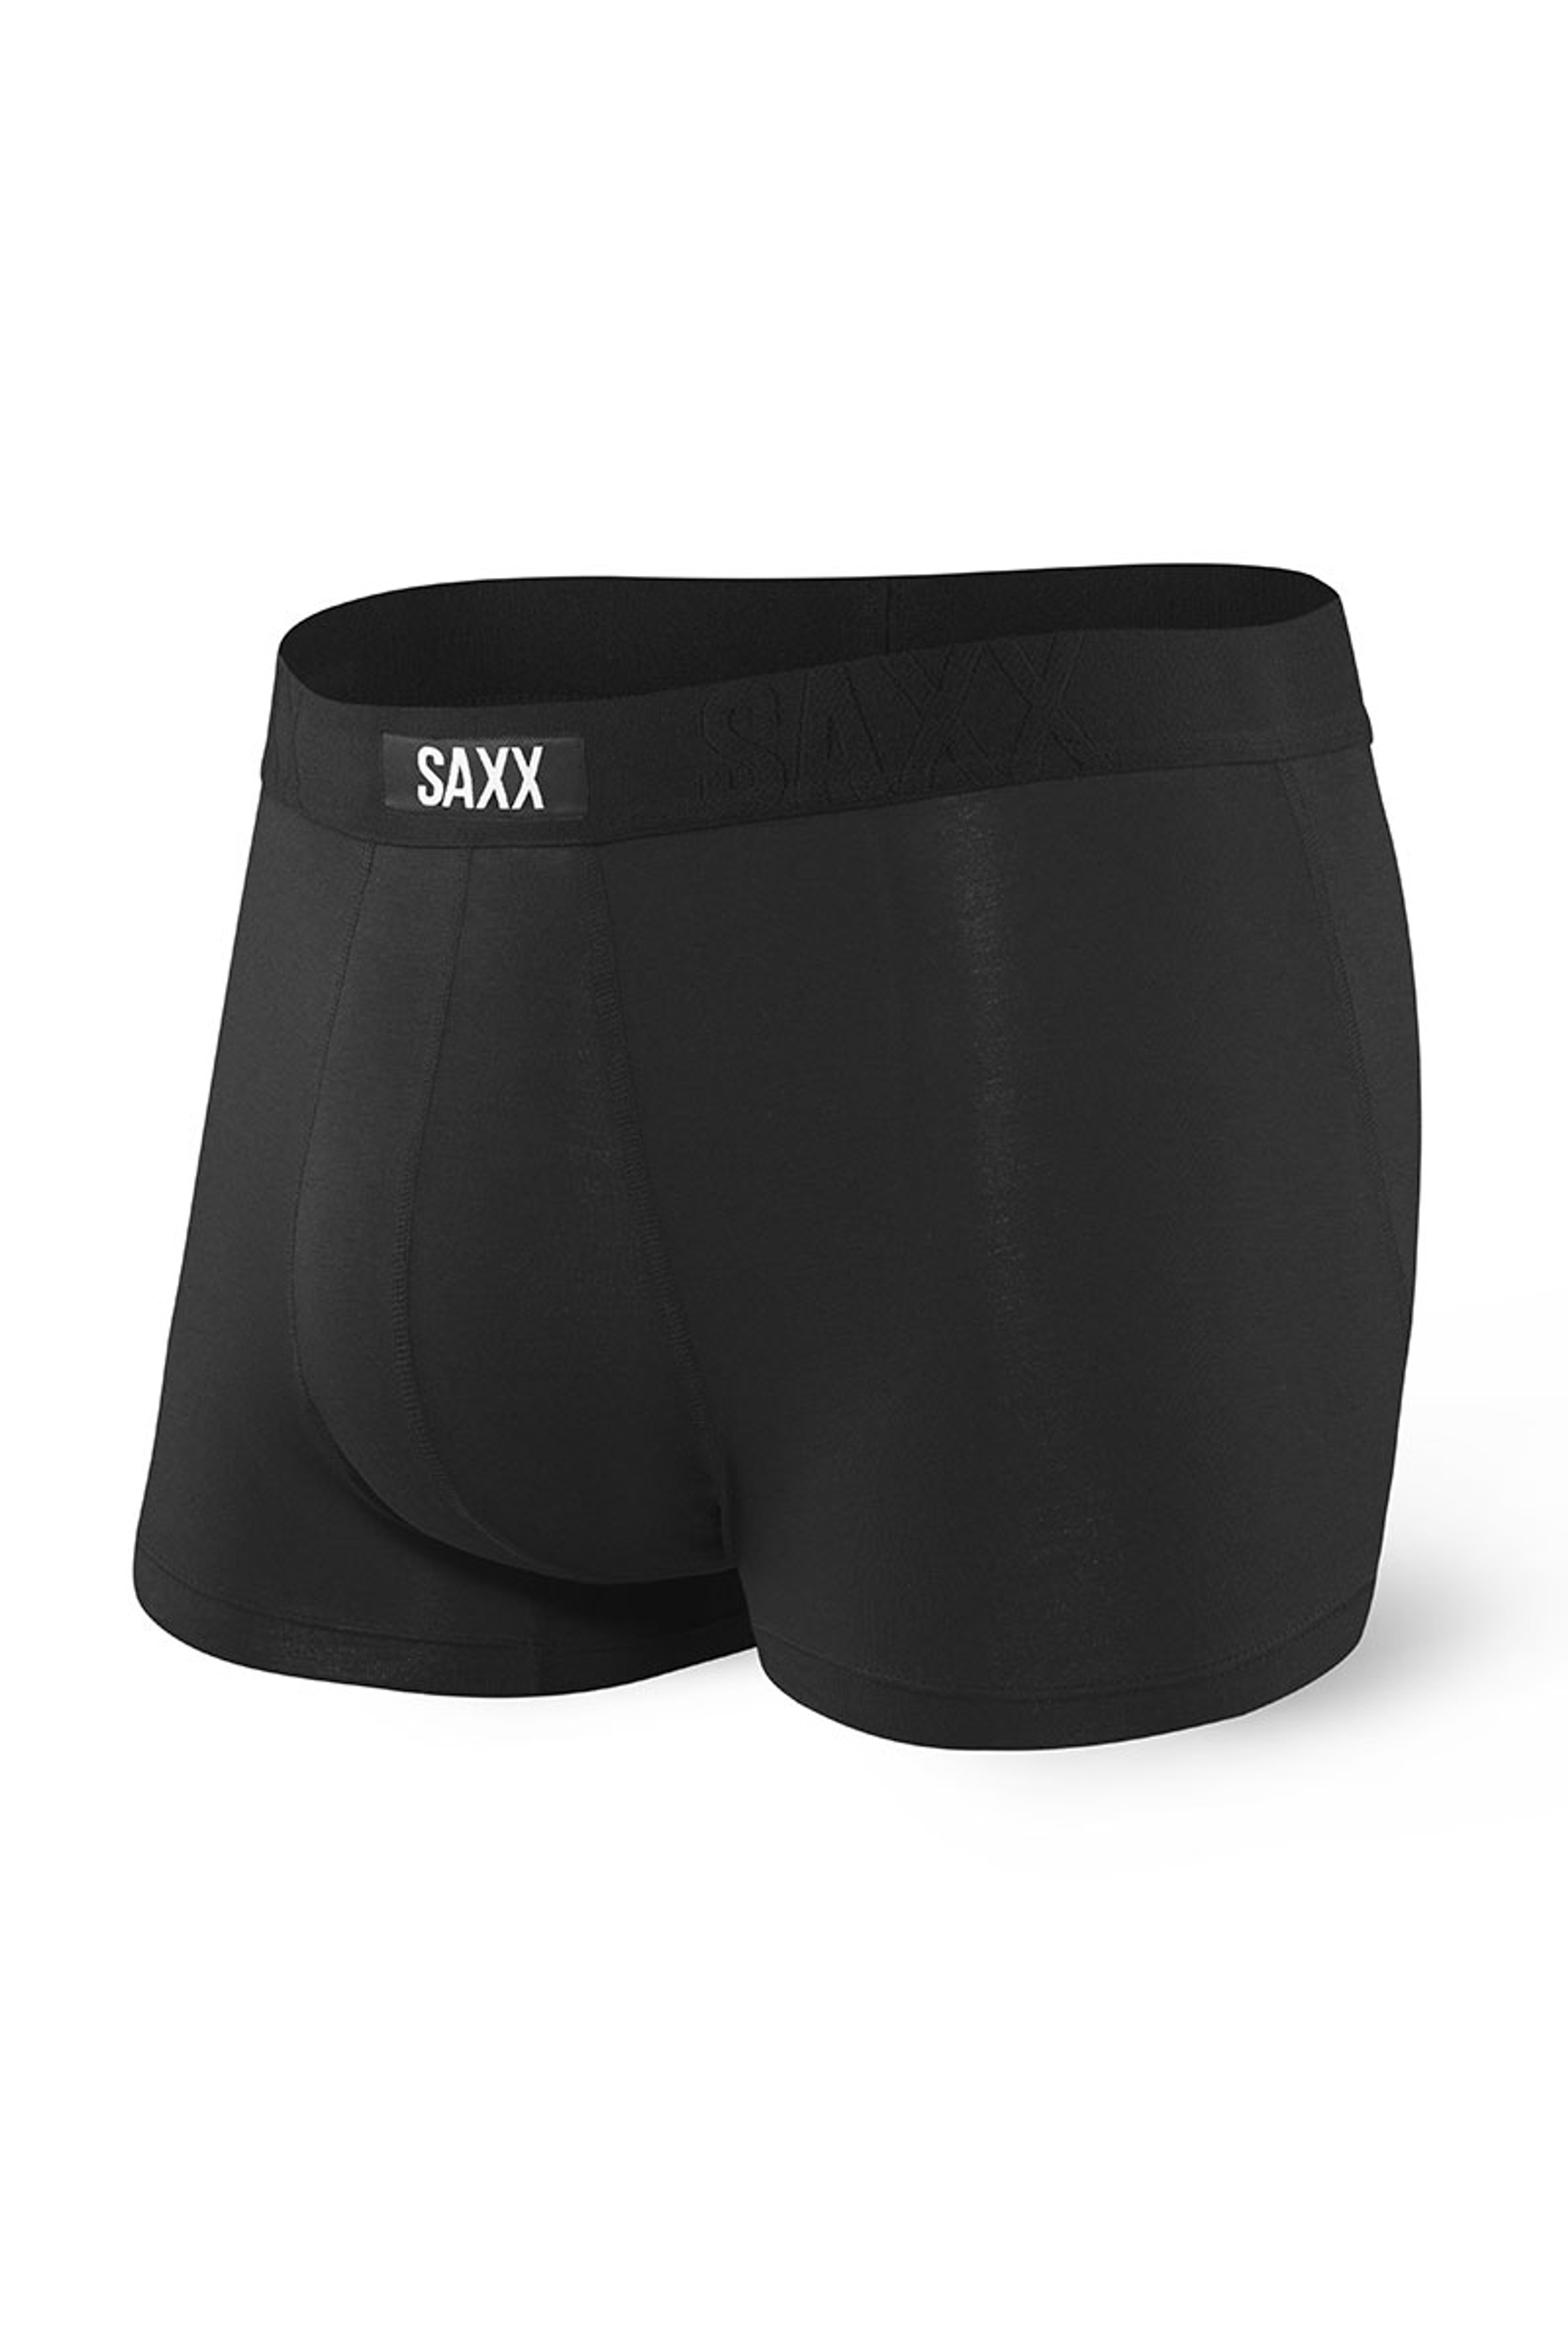 Saxx Ultra Trunk w/ Fly | Black/Black SXTR30F-BBB | Mens Boxer Briefs ...